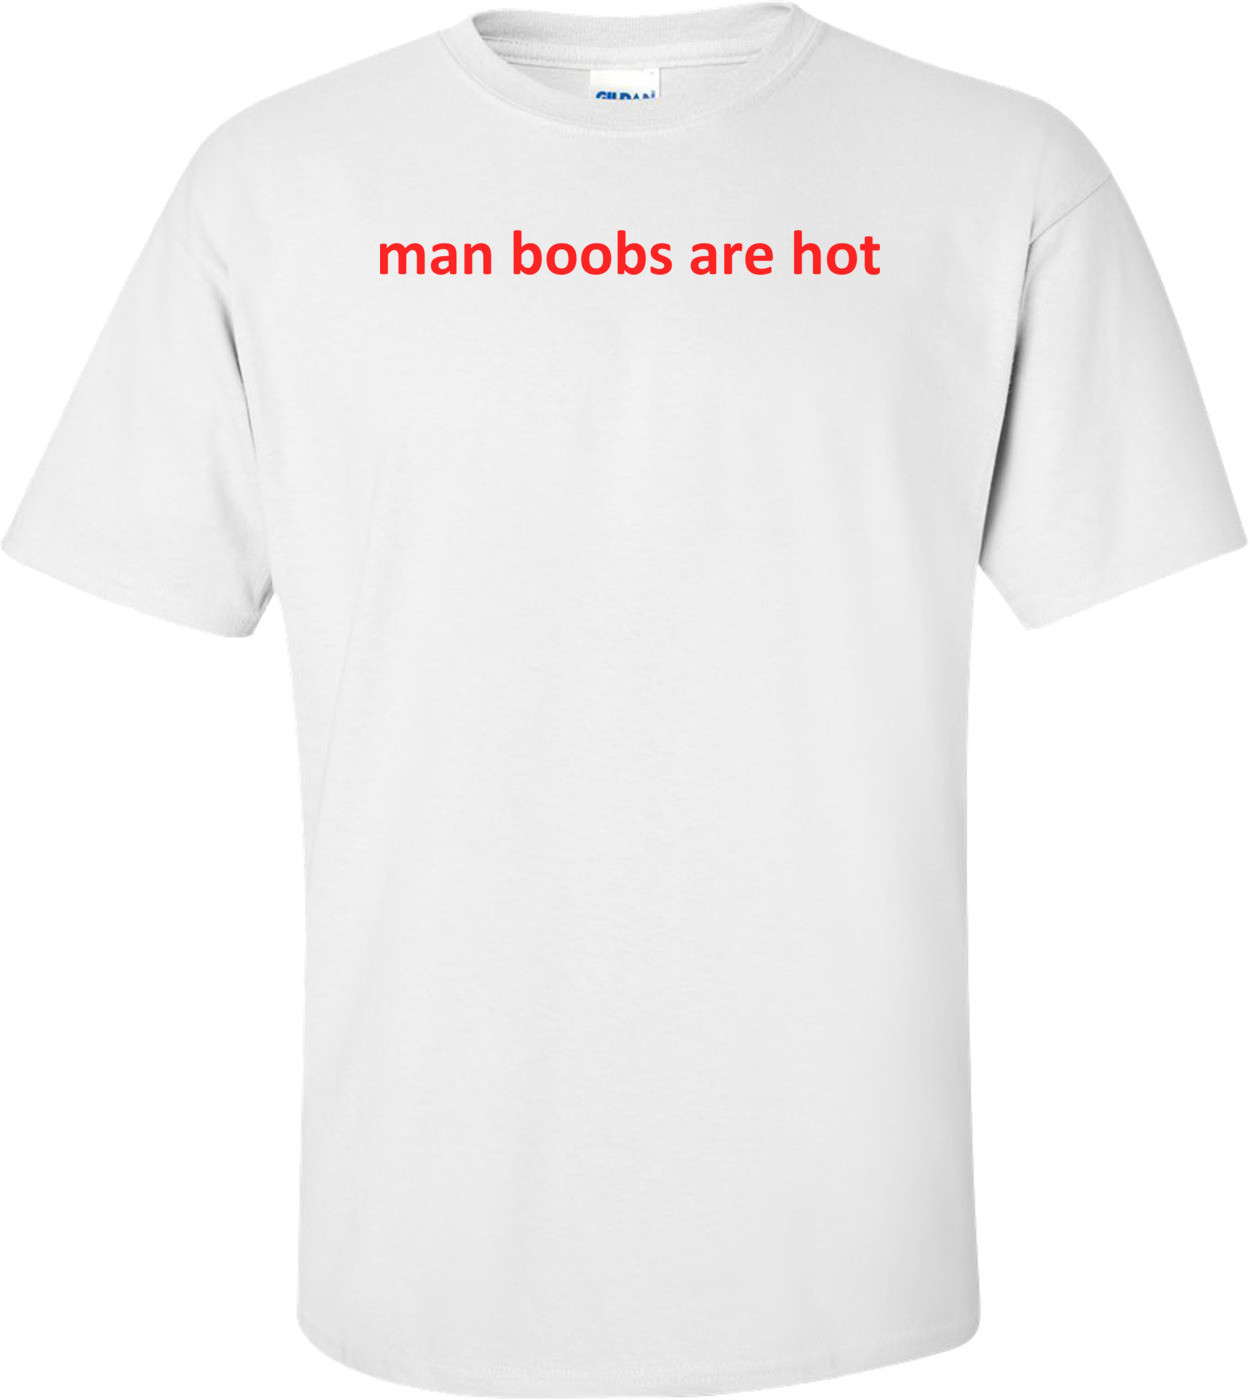 man boobs are hot Shirt